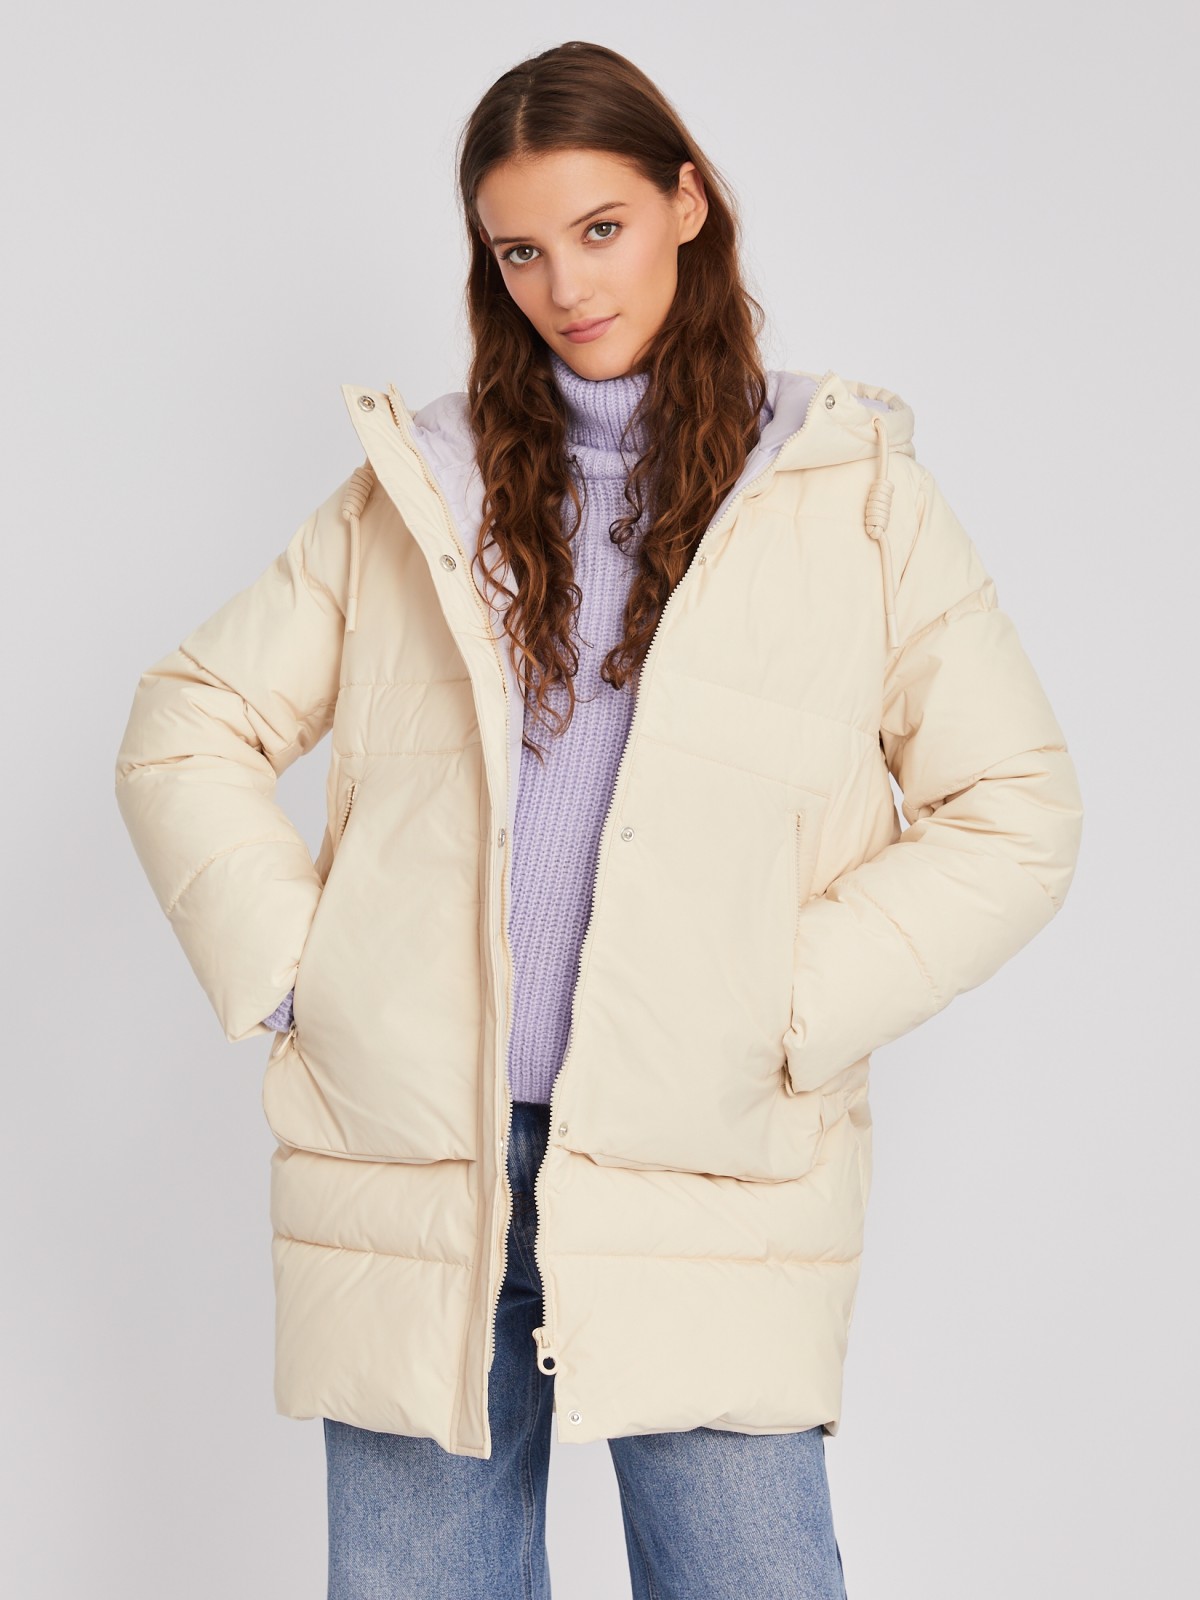 Тёплая стёганая куртка-пальто с капюшоном zolla 023345202114, цвет молоко, размер XS